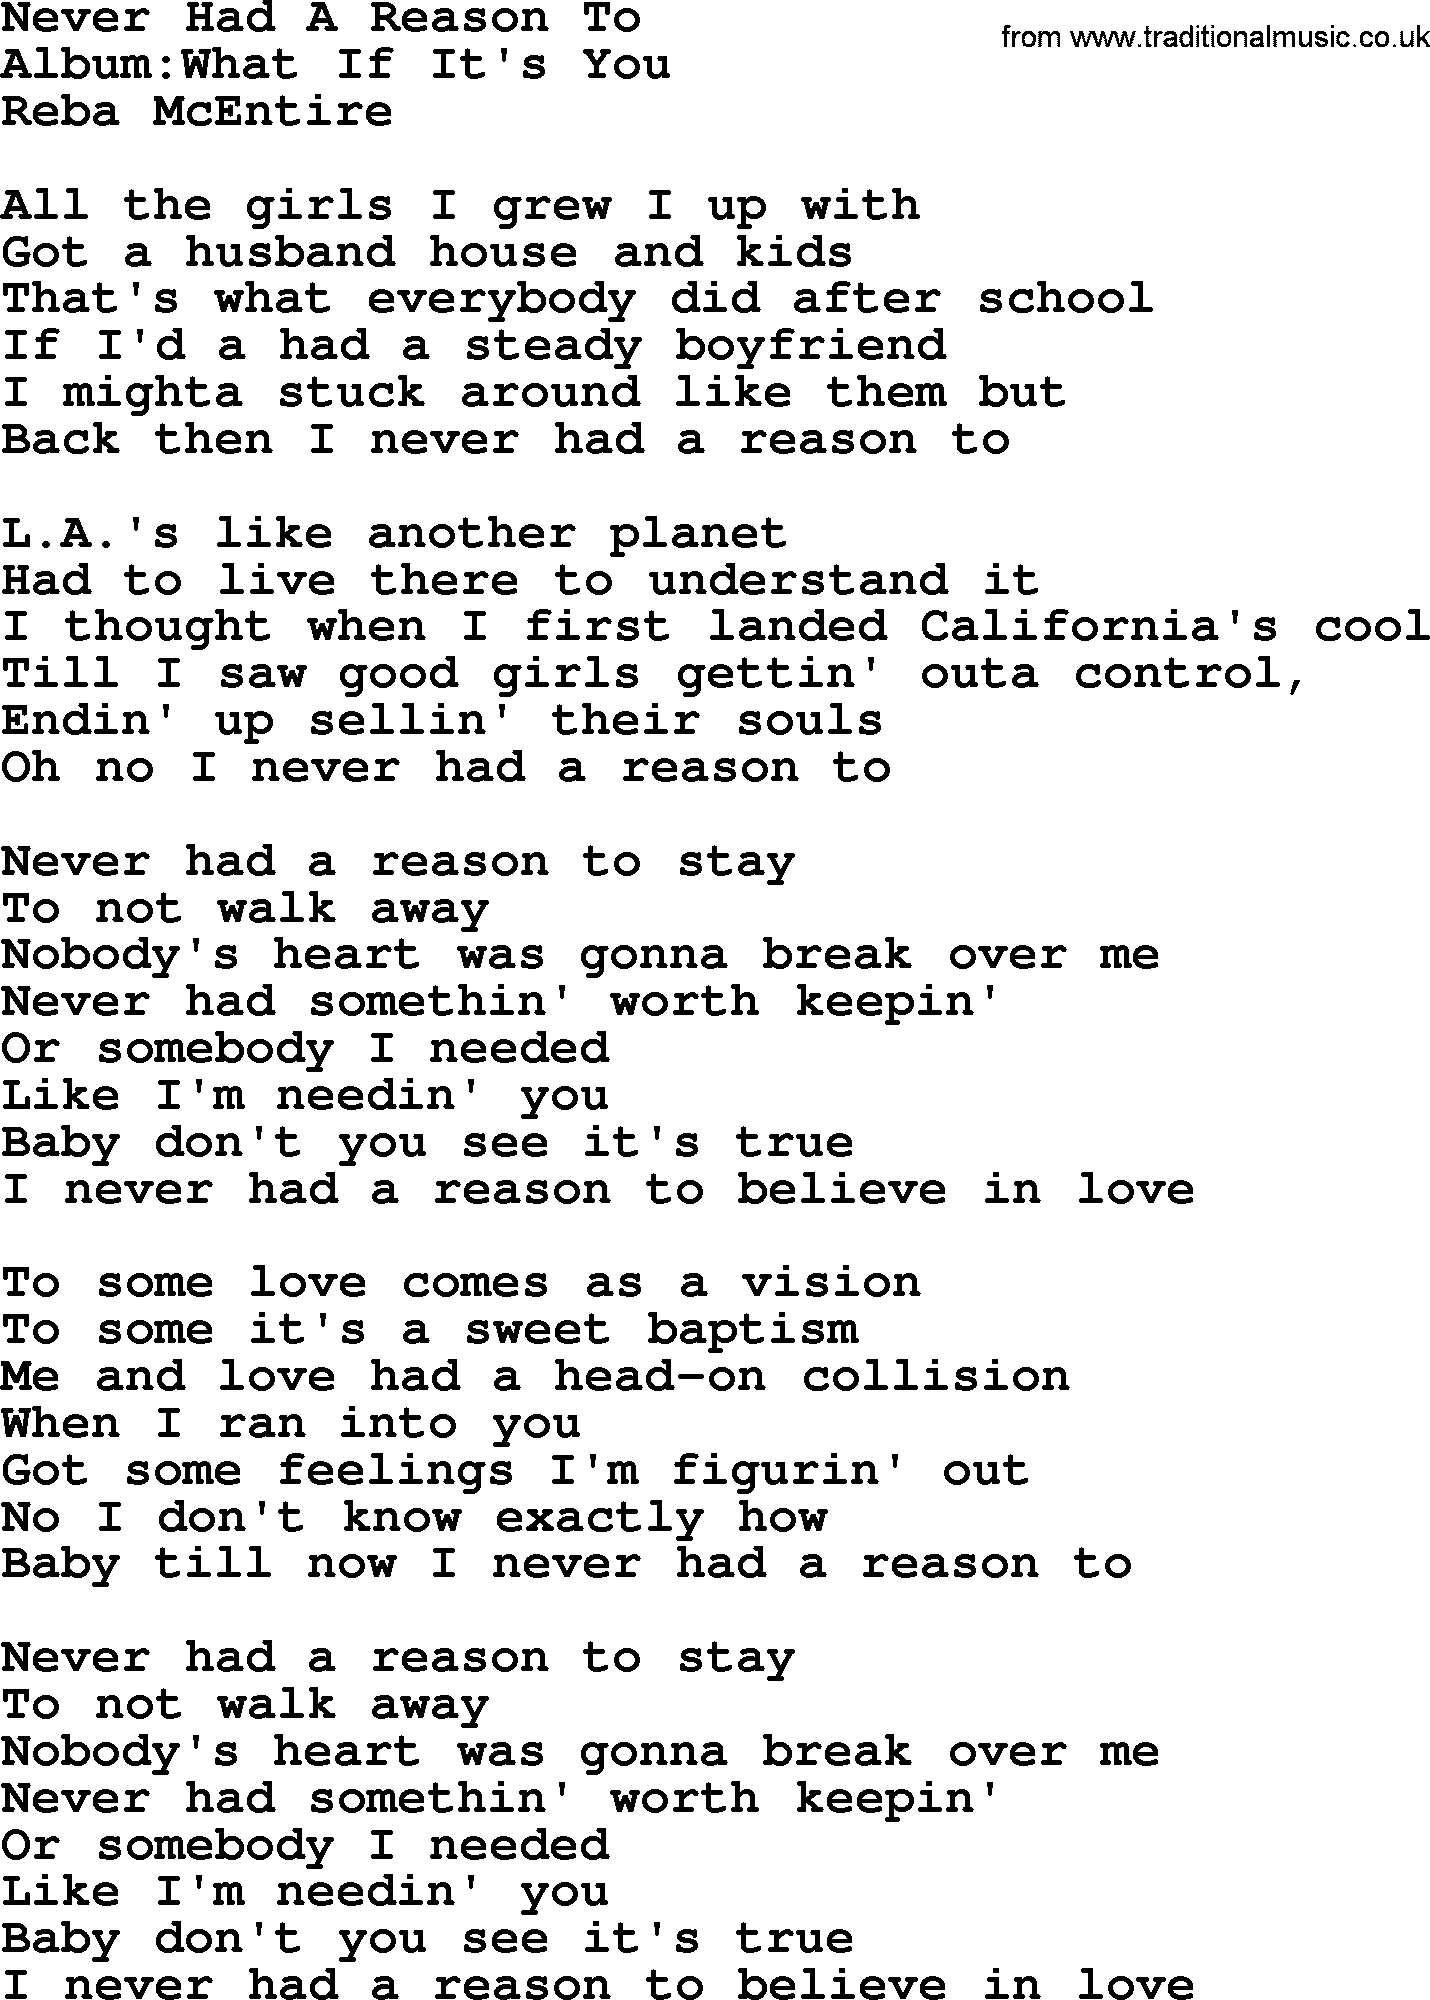 Reba McEntire song: Never Had A Reason To lyrics